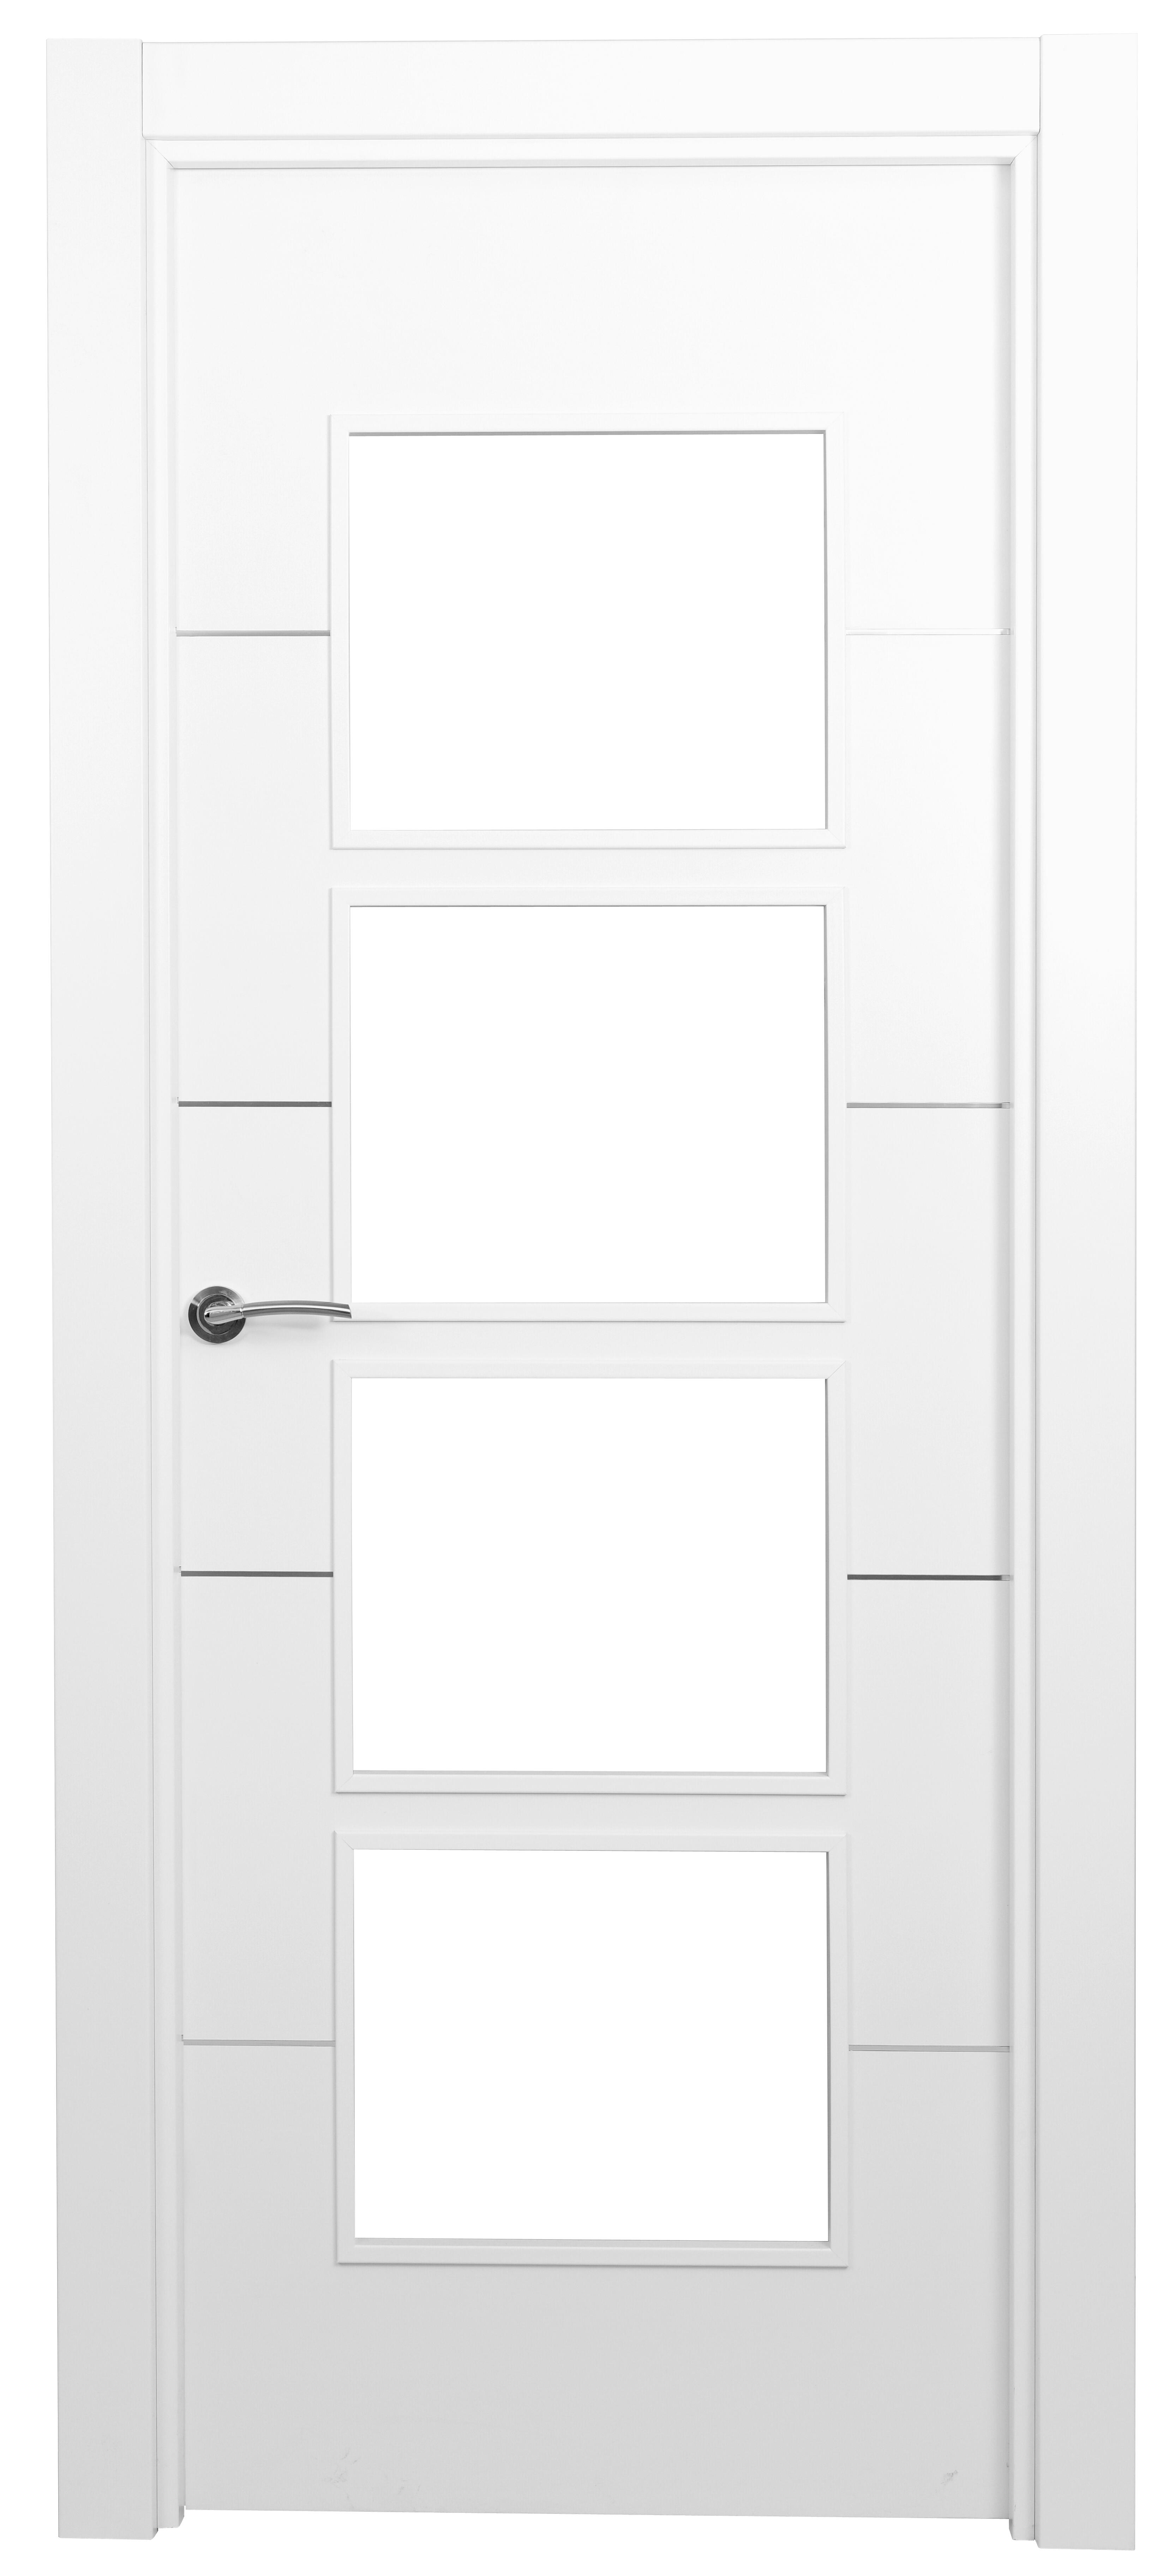 Puerta abatible paris blanca premium apertura derecha de 9x82.5 cm